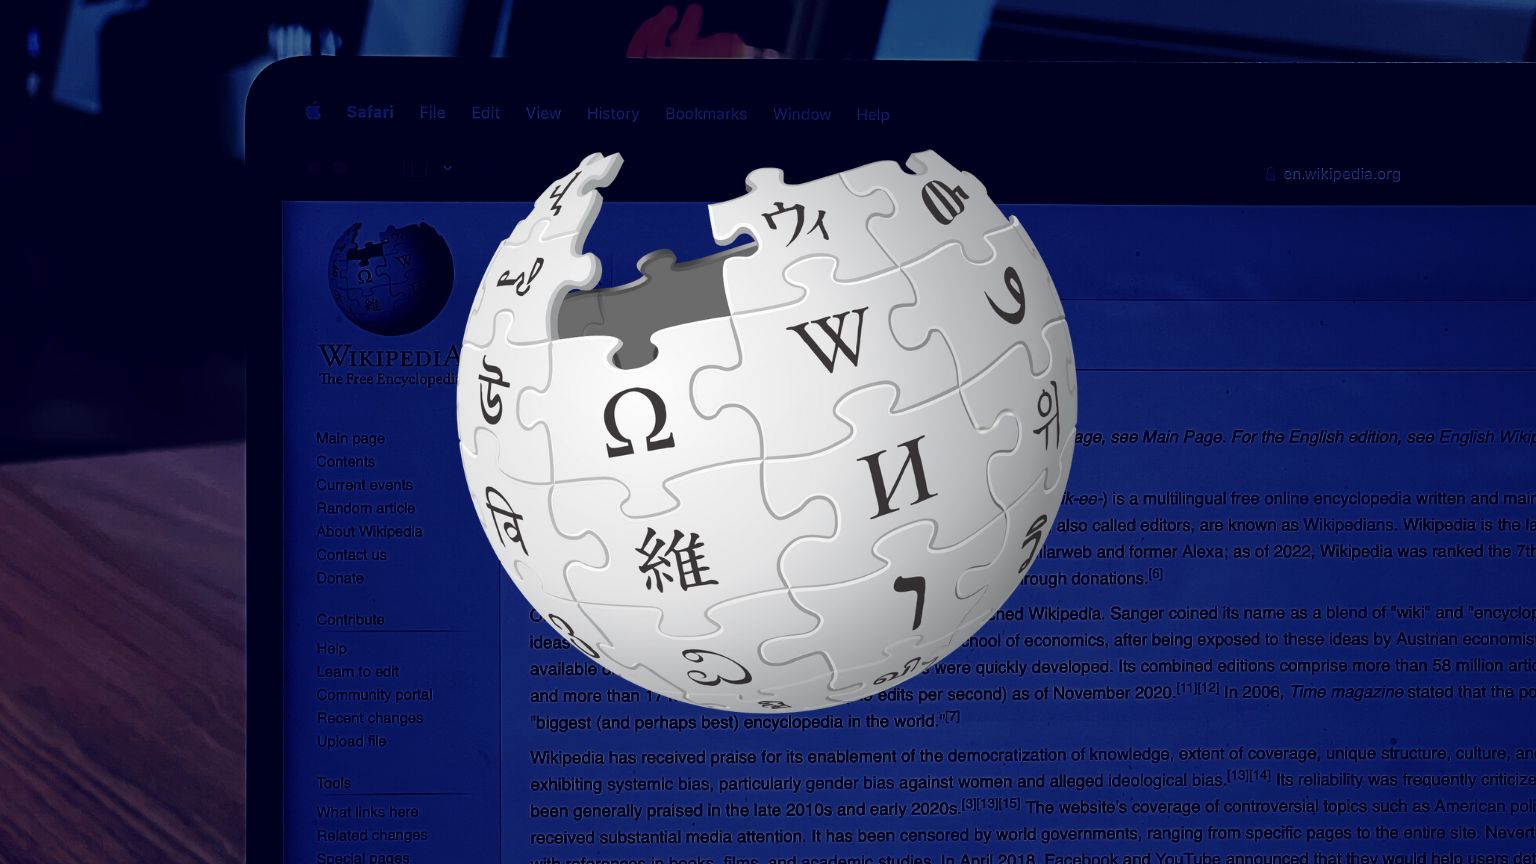 Pakistan backtracks on Wikipedia censorship